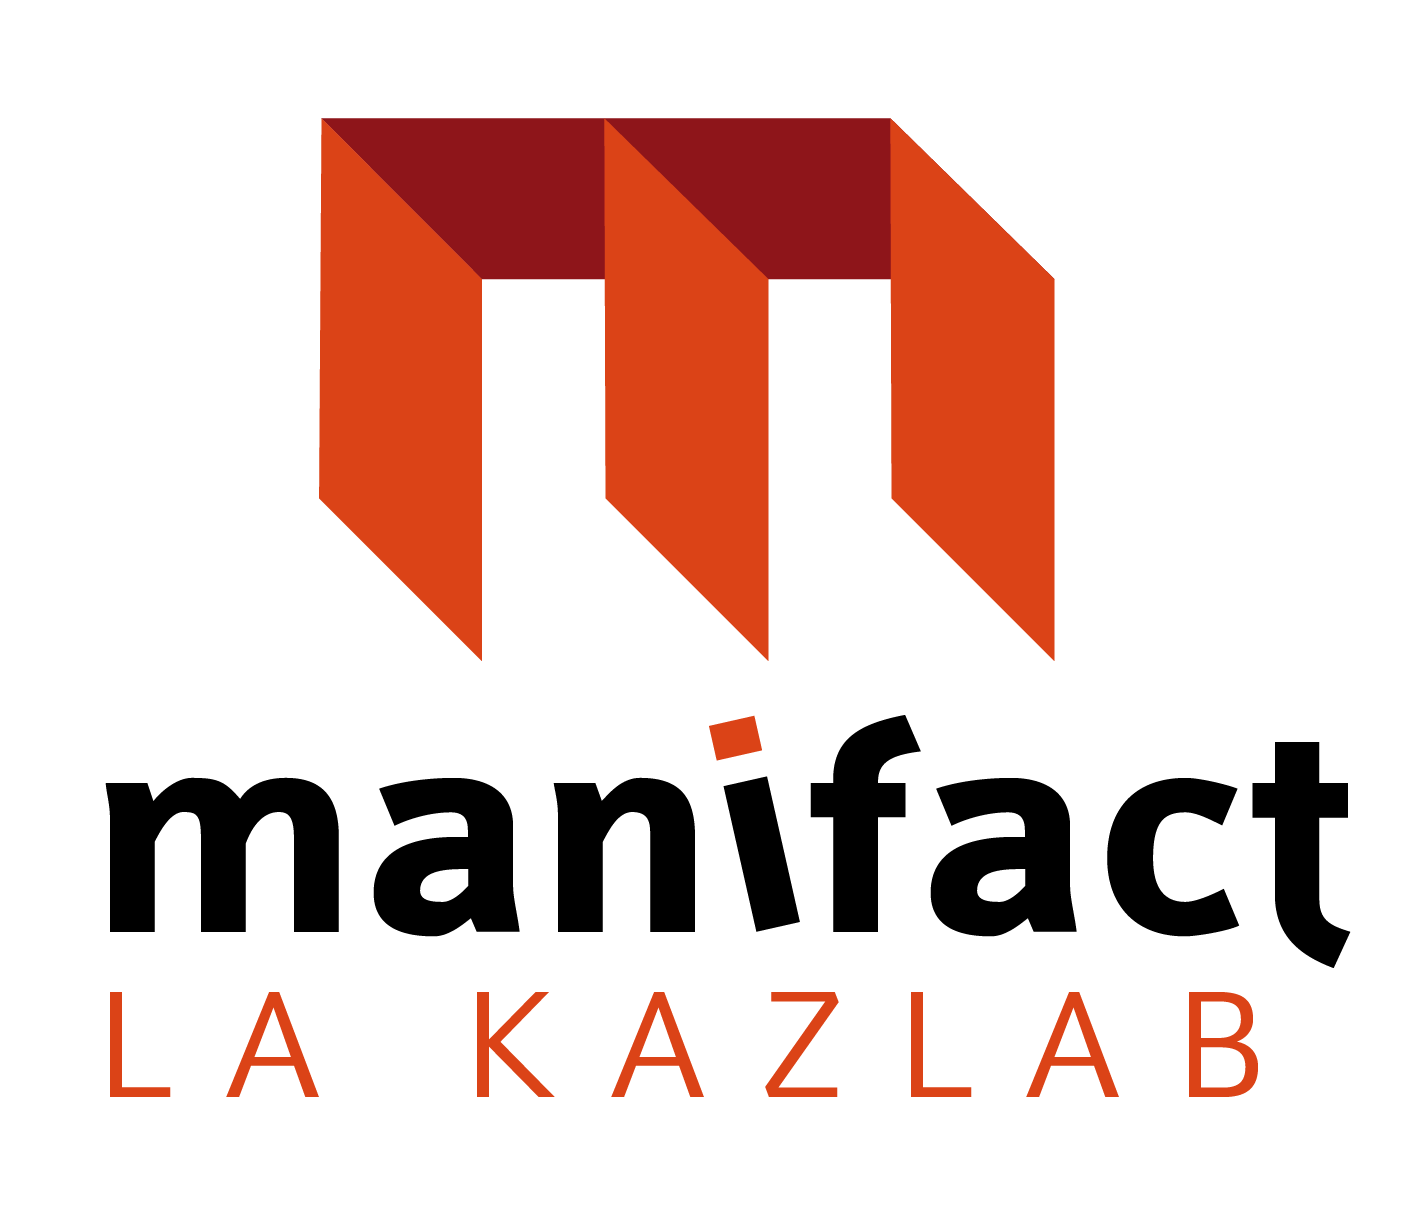 Group MANIFACT - La KazLab logo1-manifact-lakazlab widocreation-01.png